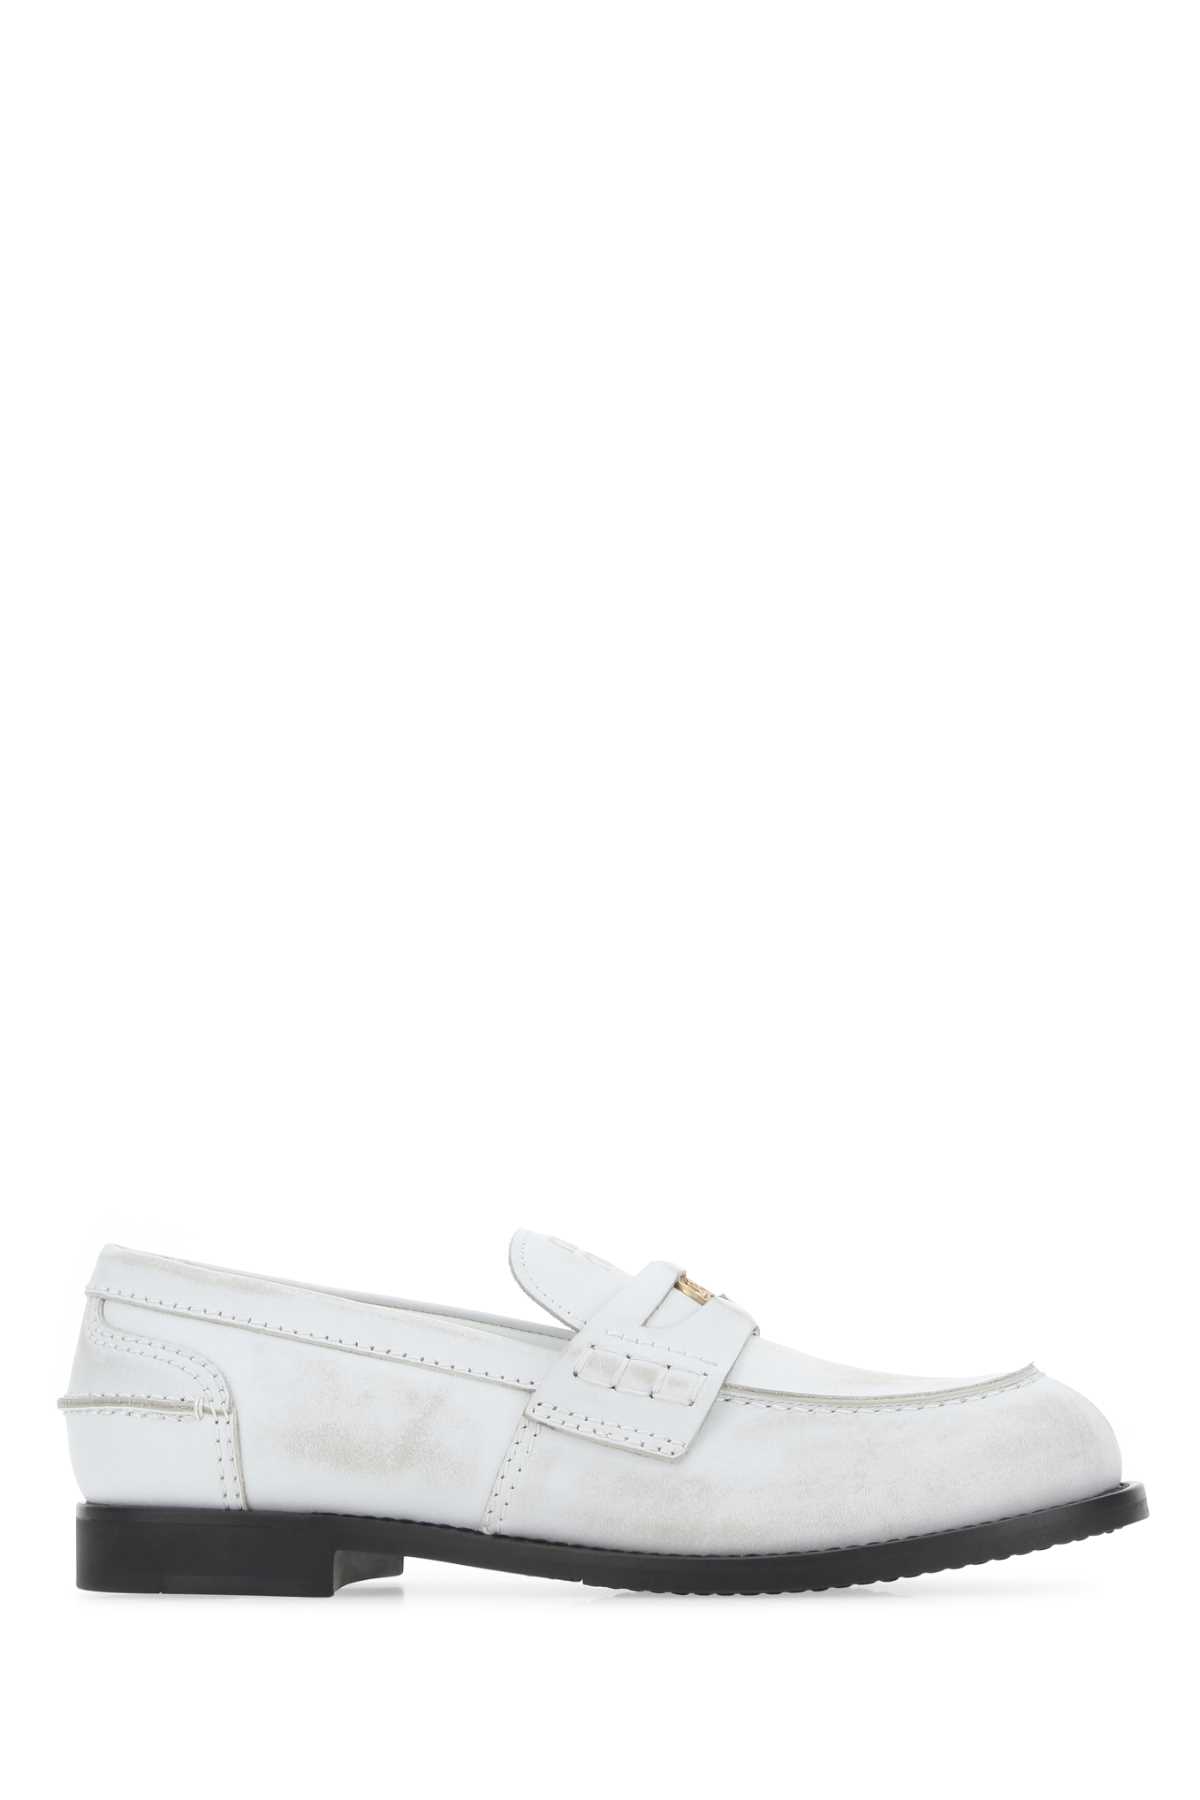 Shop Miu Miu White Leather Loafers